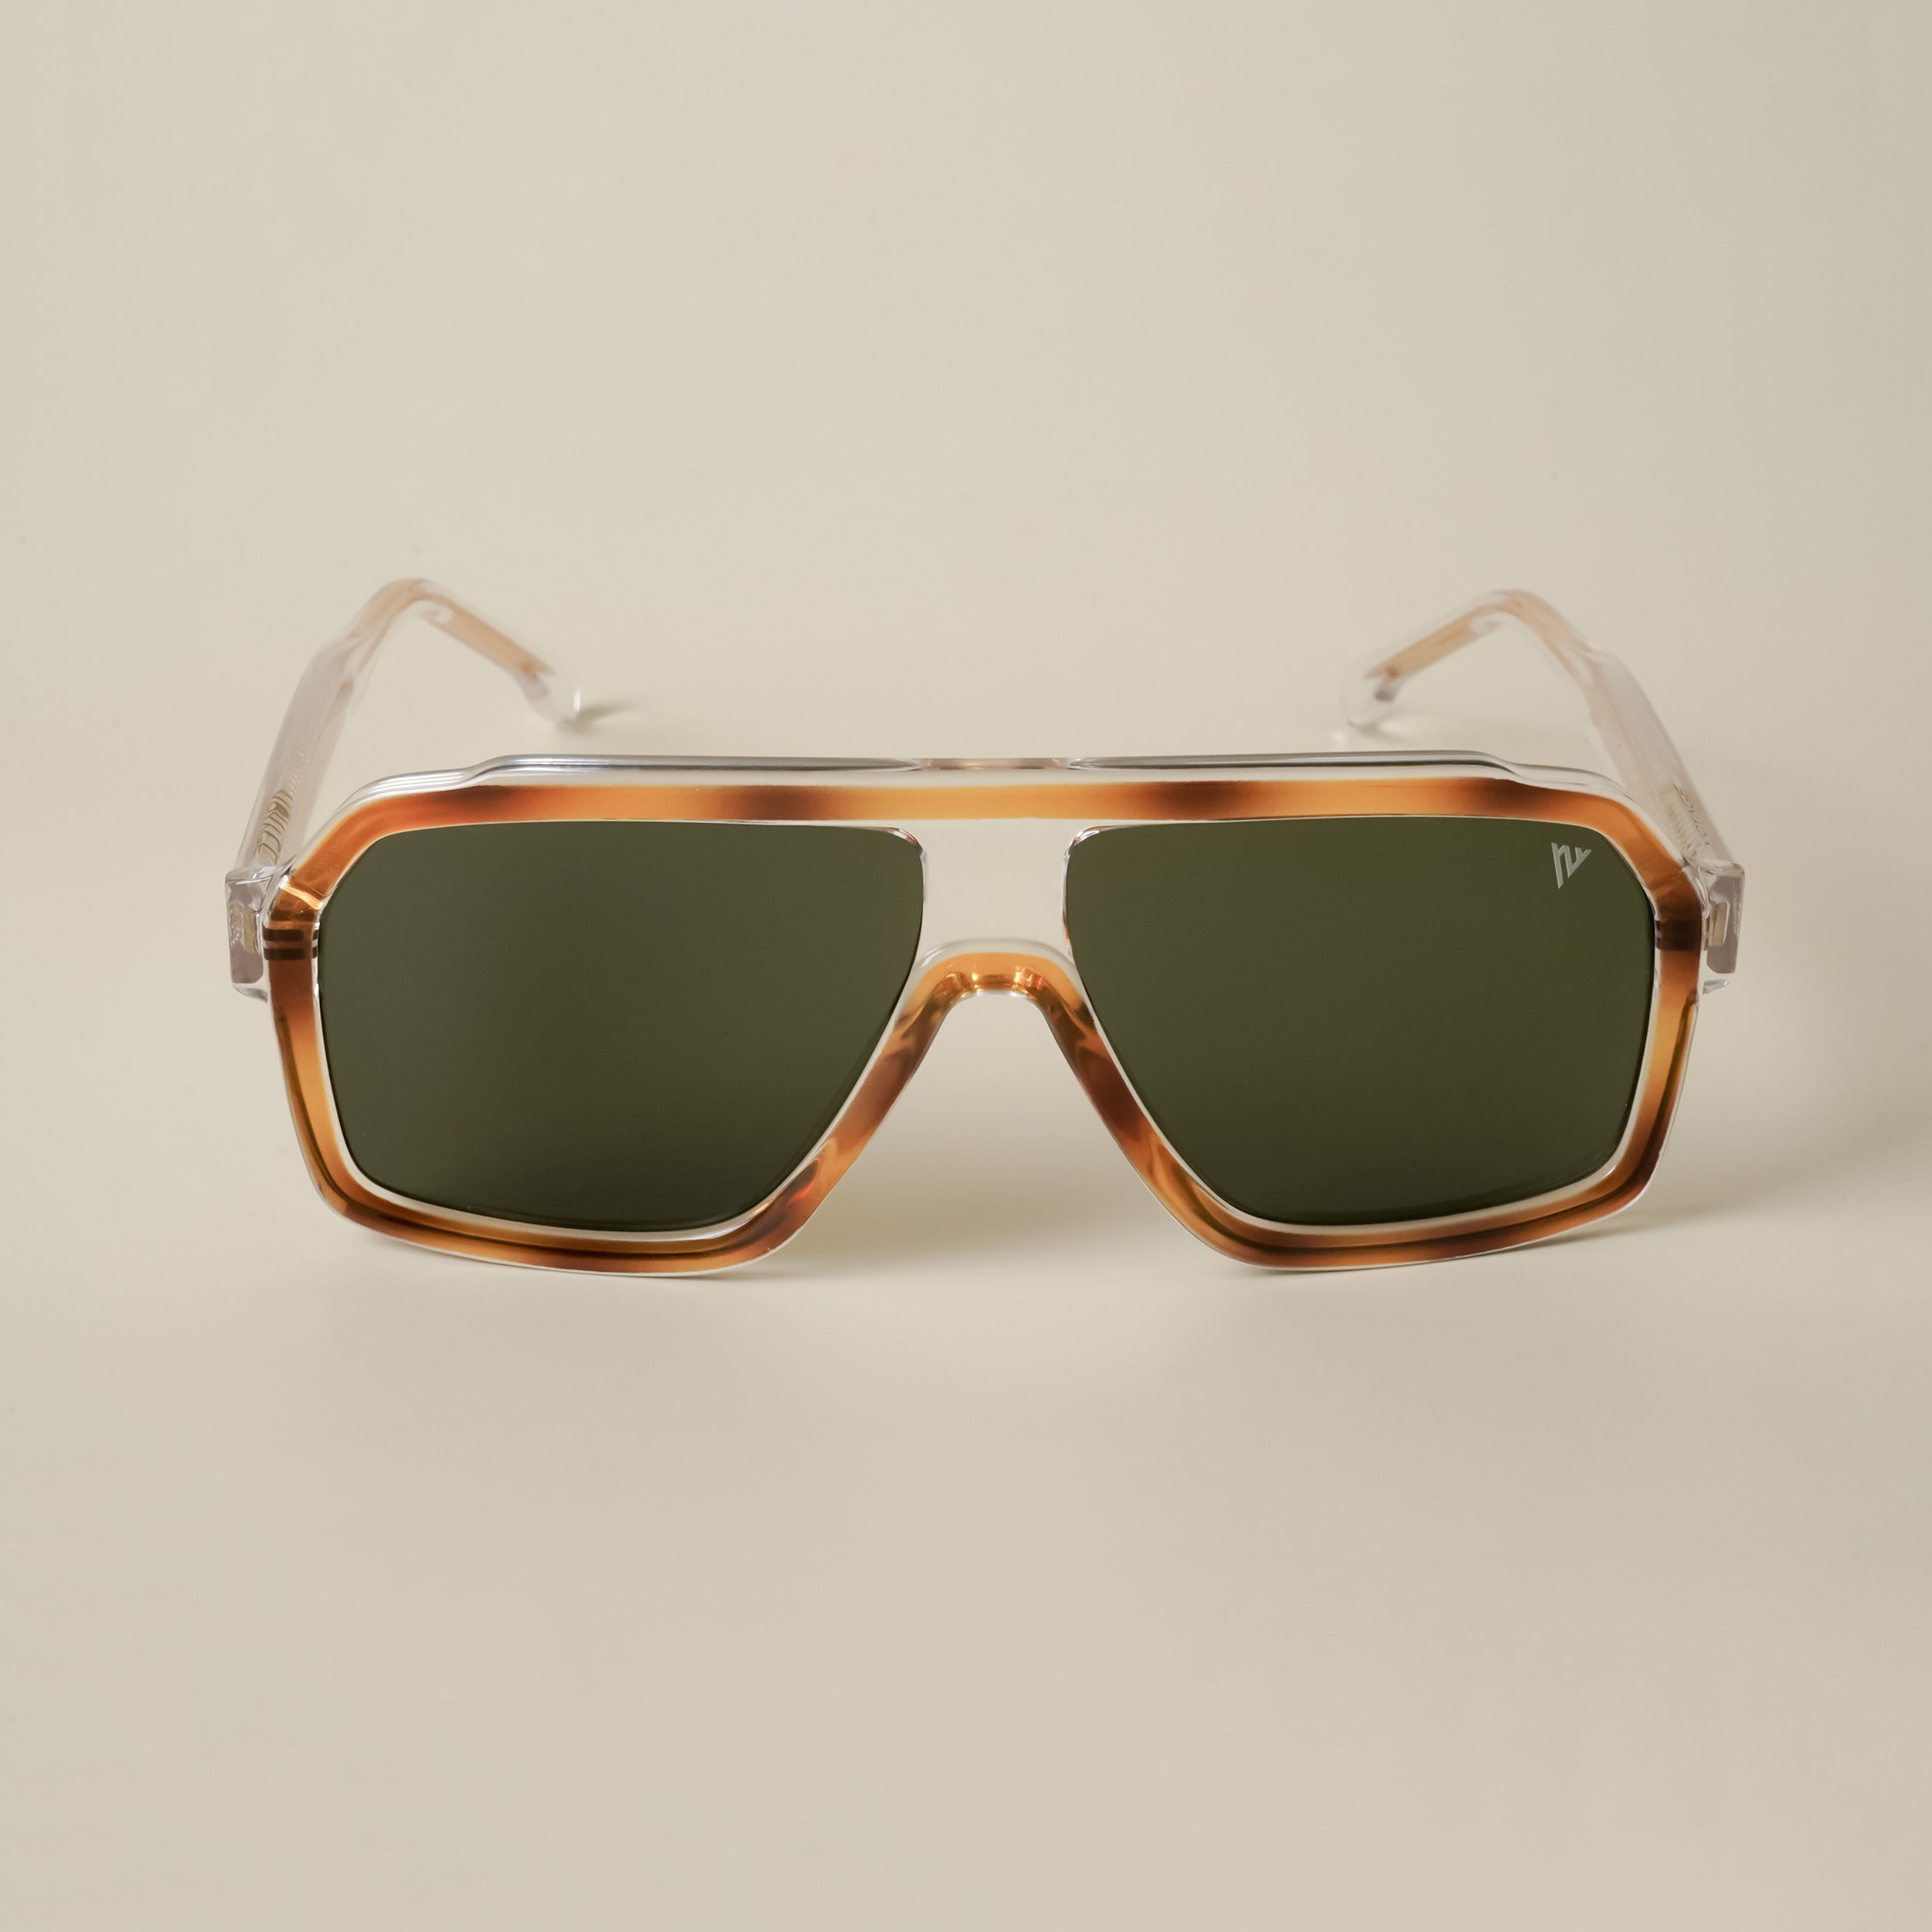 Voyage Green Wrap Around Sunglasses for Men & Women (58974MG4747)